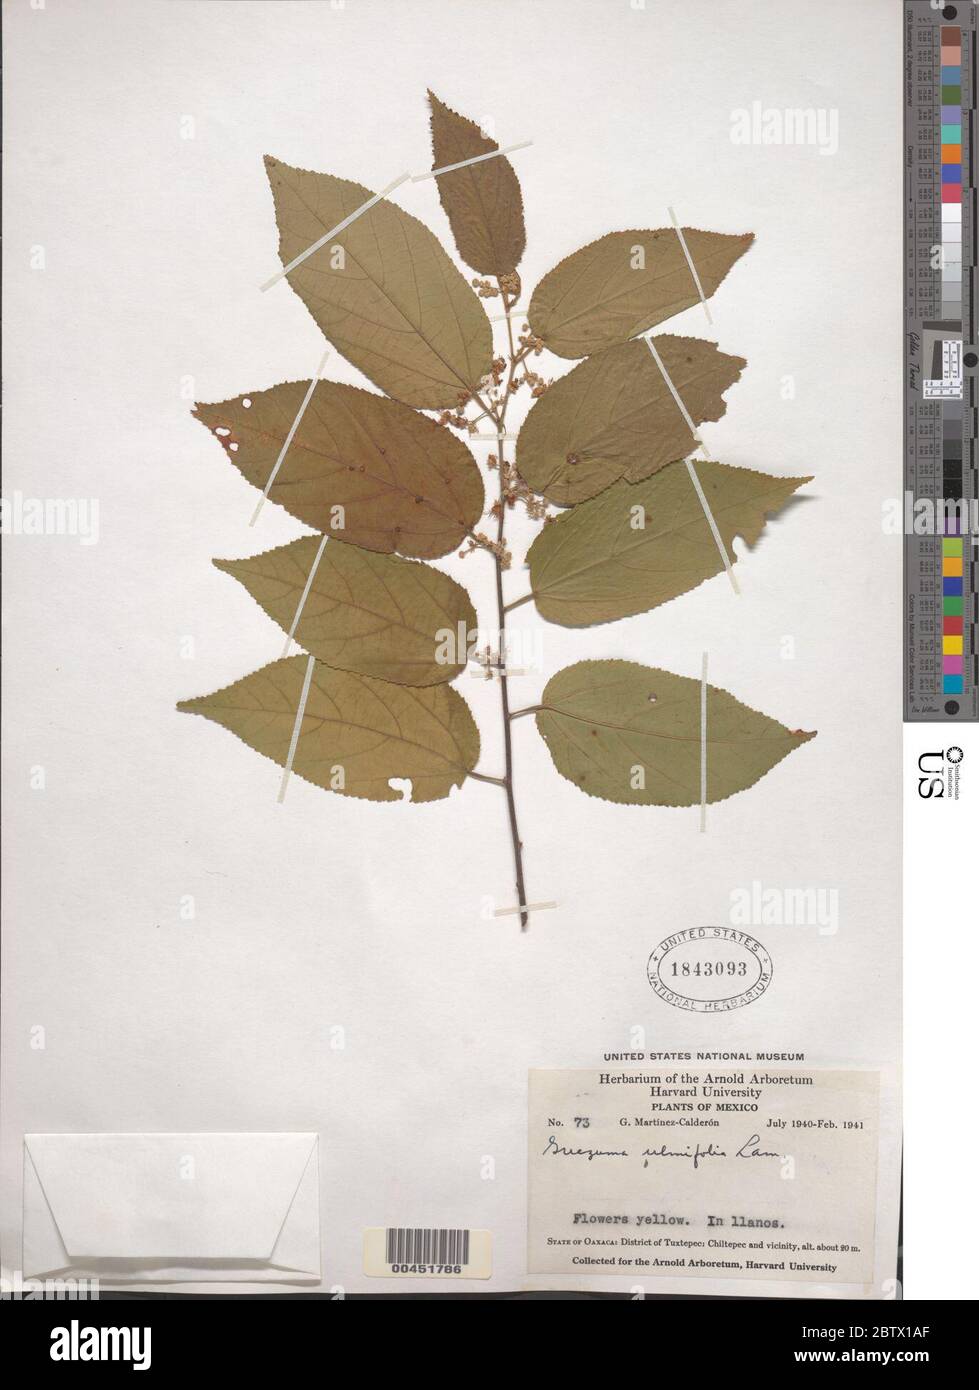 Guazuma ulmifolia Lam. Stock Photo